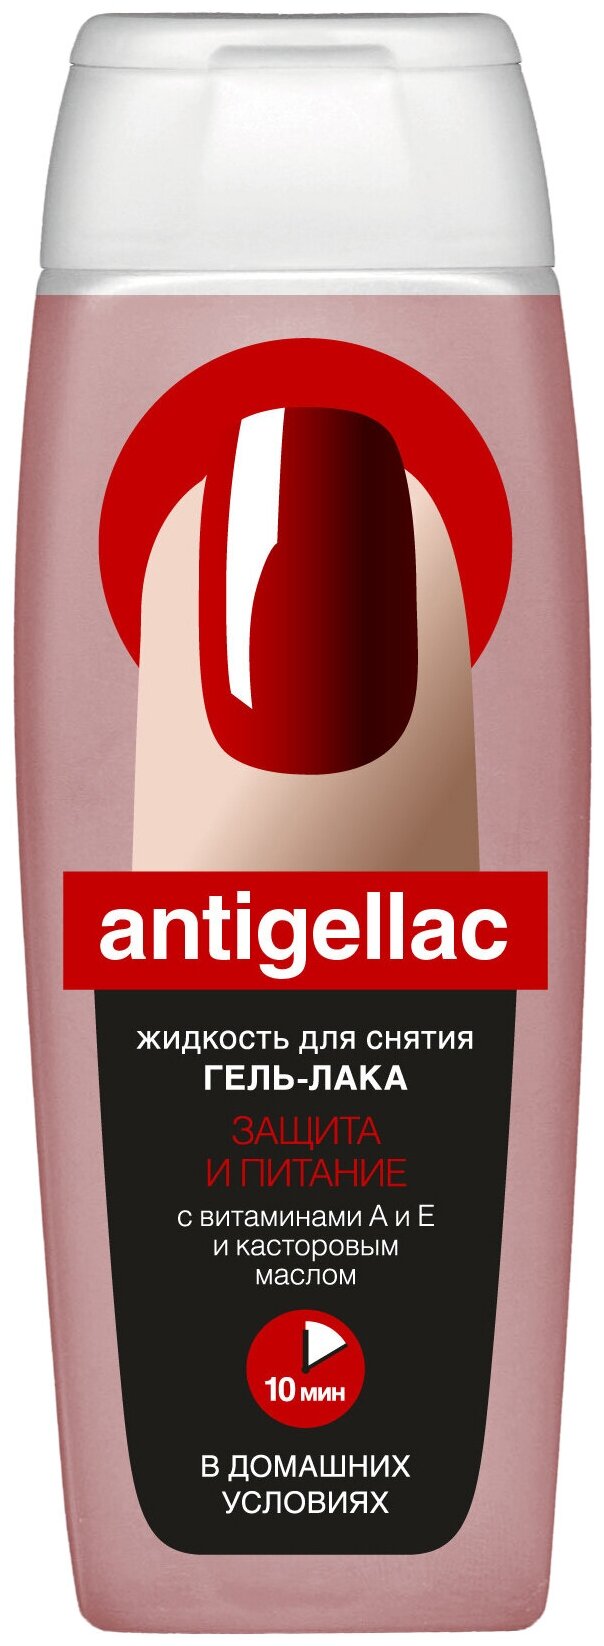 Fito Косметик Жидкость для снятия гель-лака Antishellac защита И питание с витаминами А и Е, 110 мл